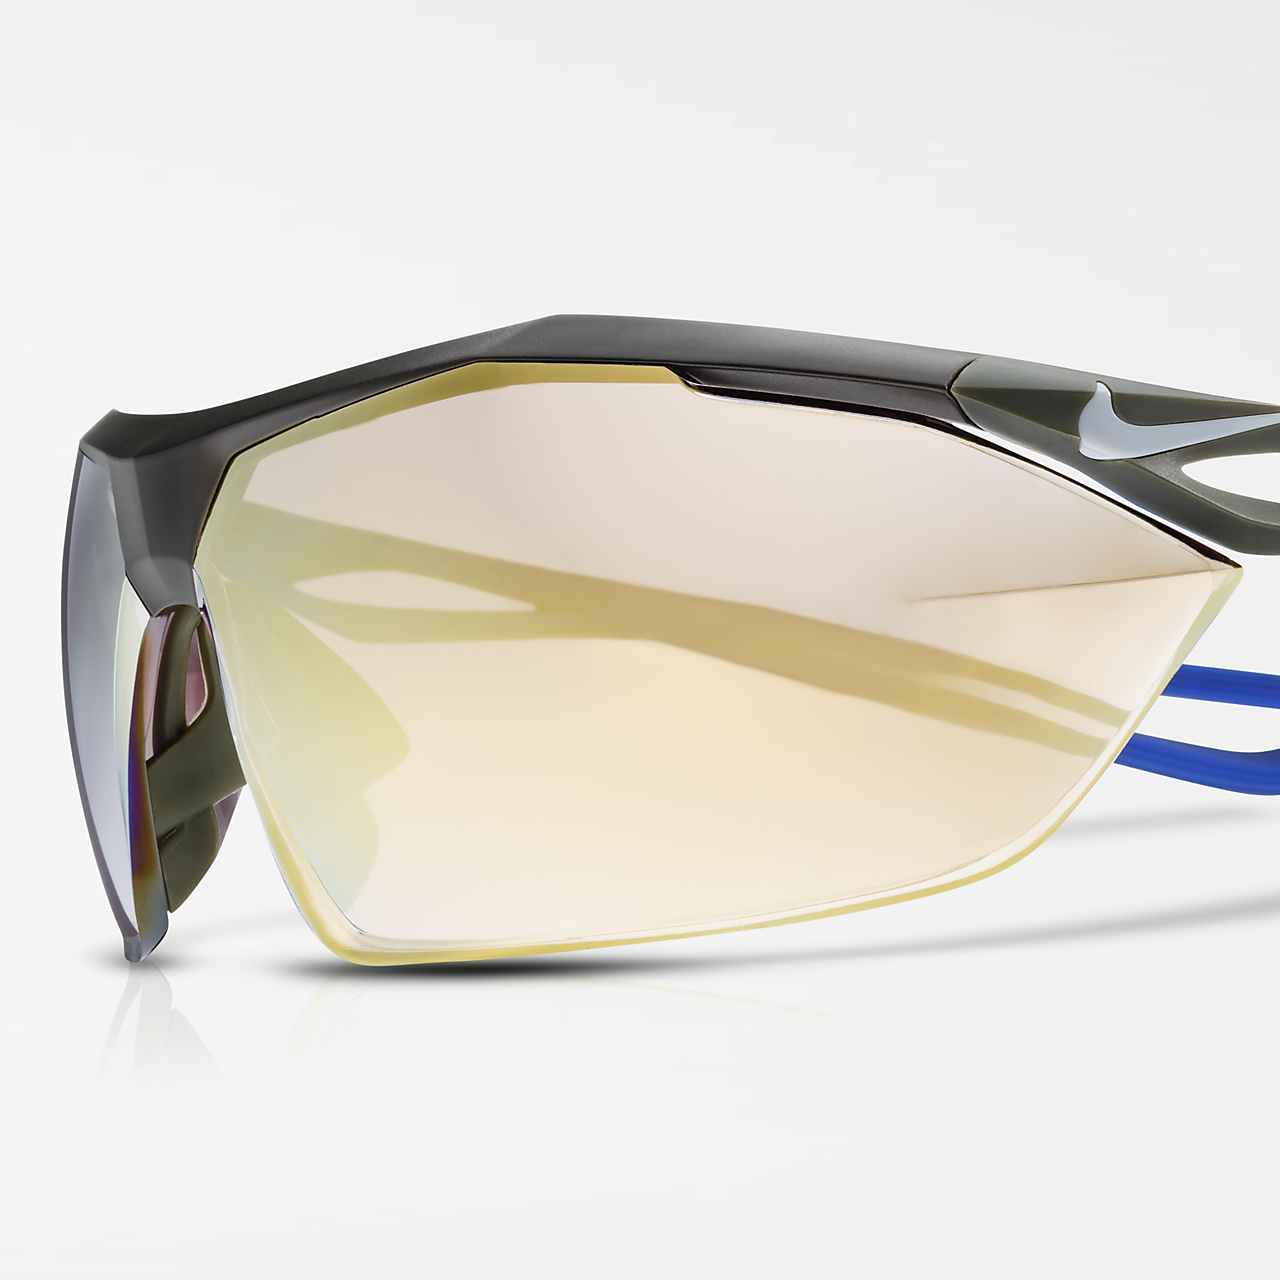 Nike Vaporwing Speed Tint Sunglasses